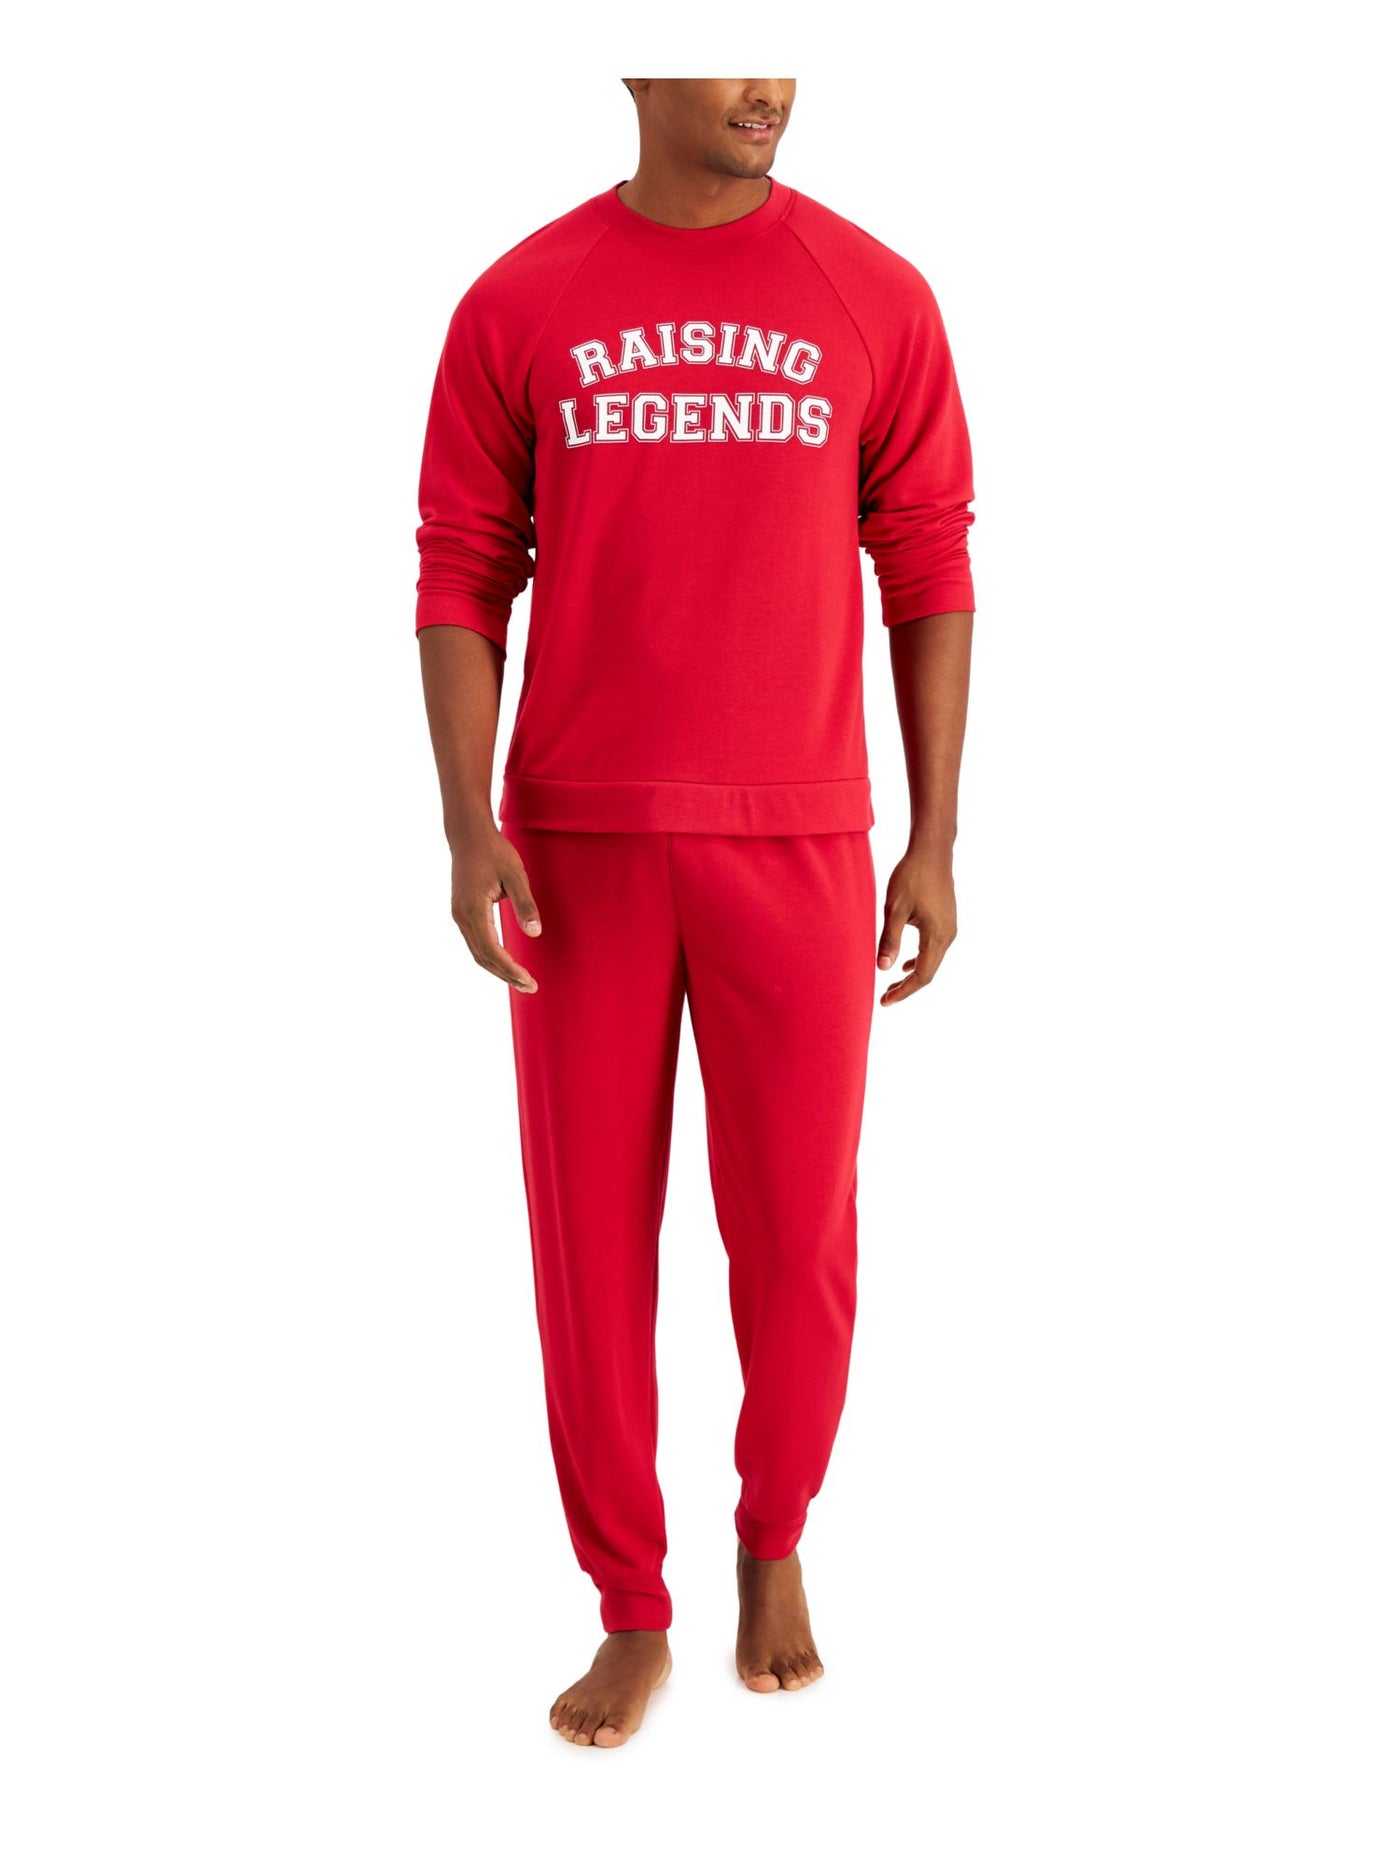 FAMILY PJs Mens Red Printed Top Elastic Band Long Sleeve Lounge Pants Pajamas L